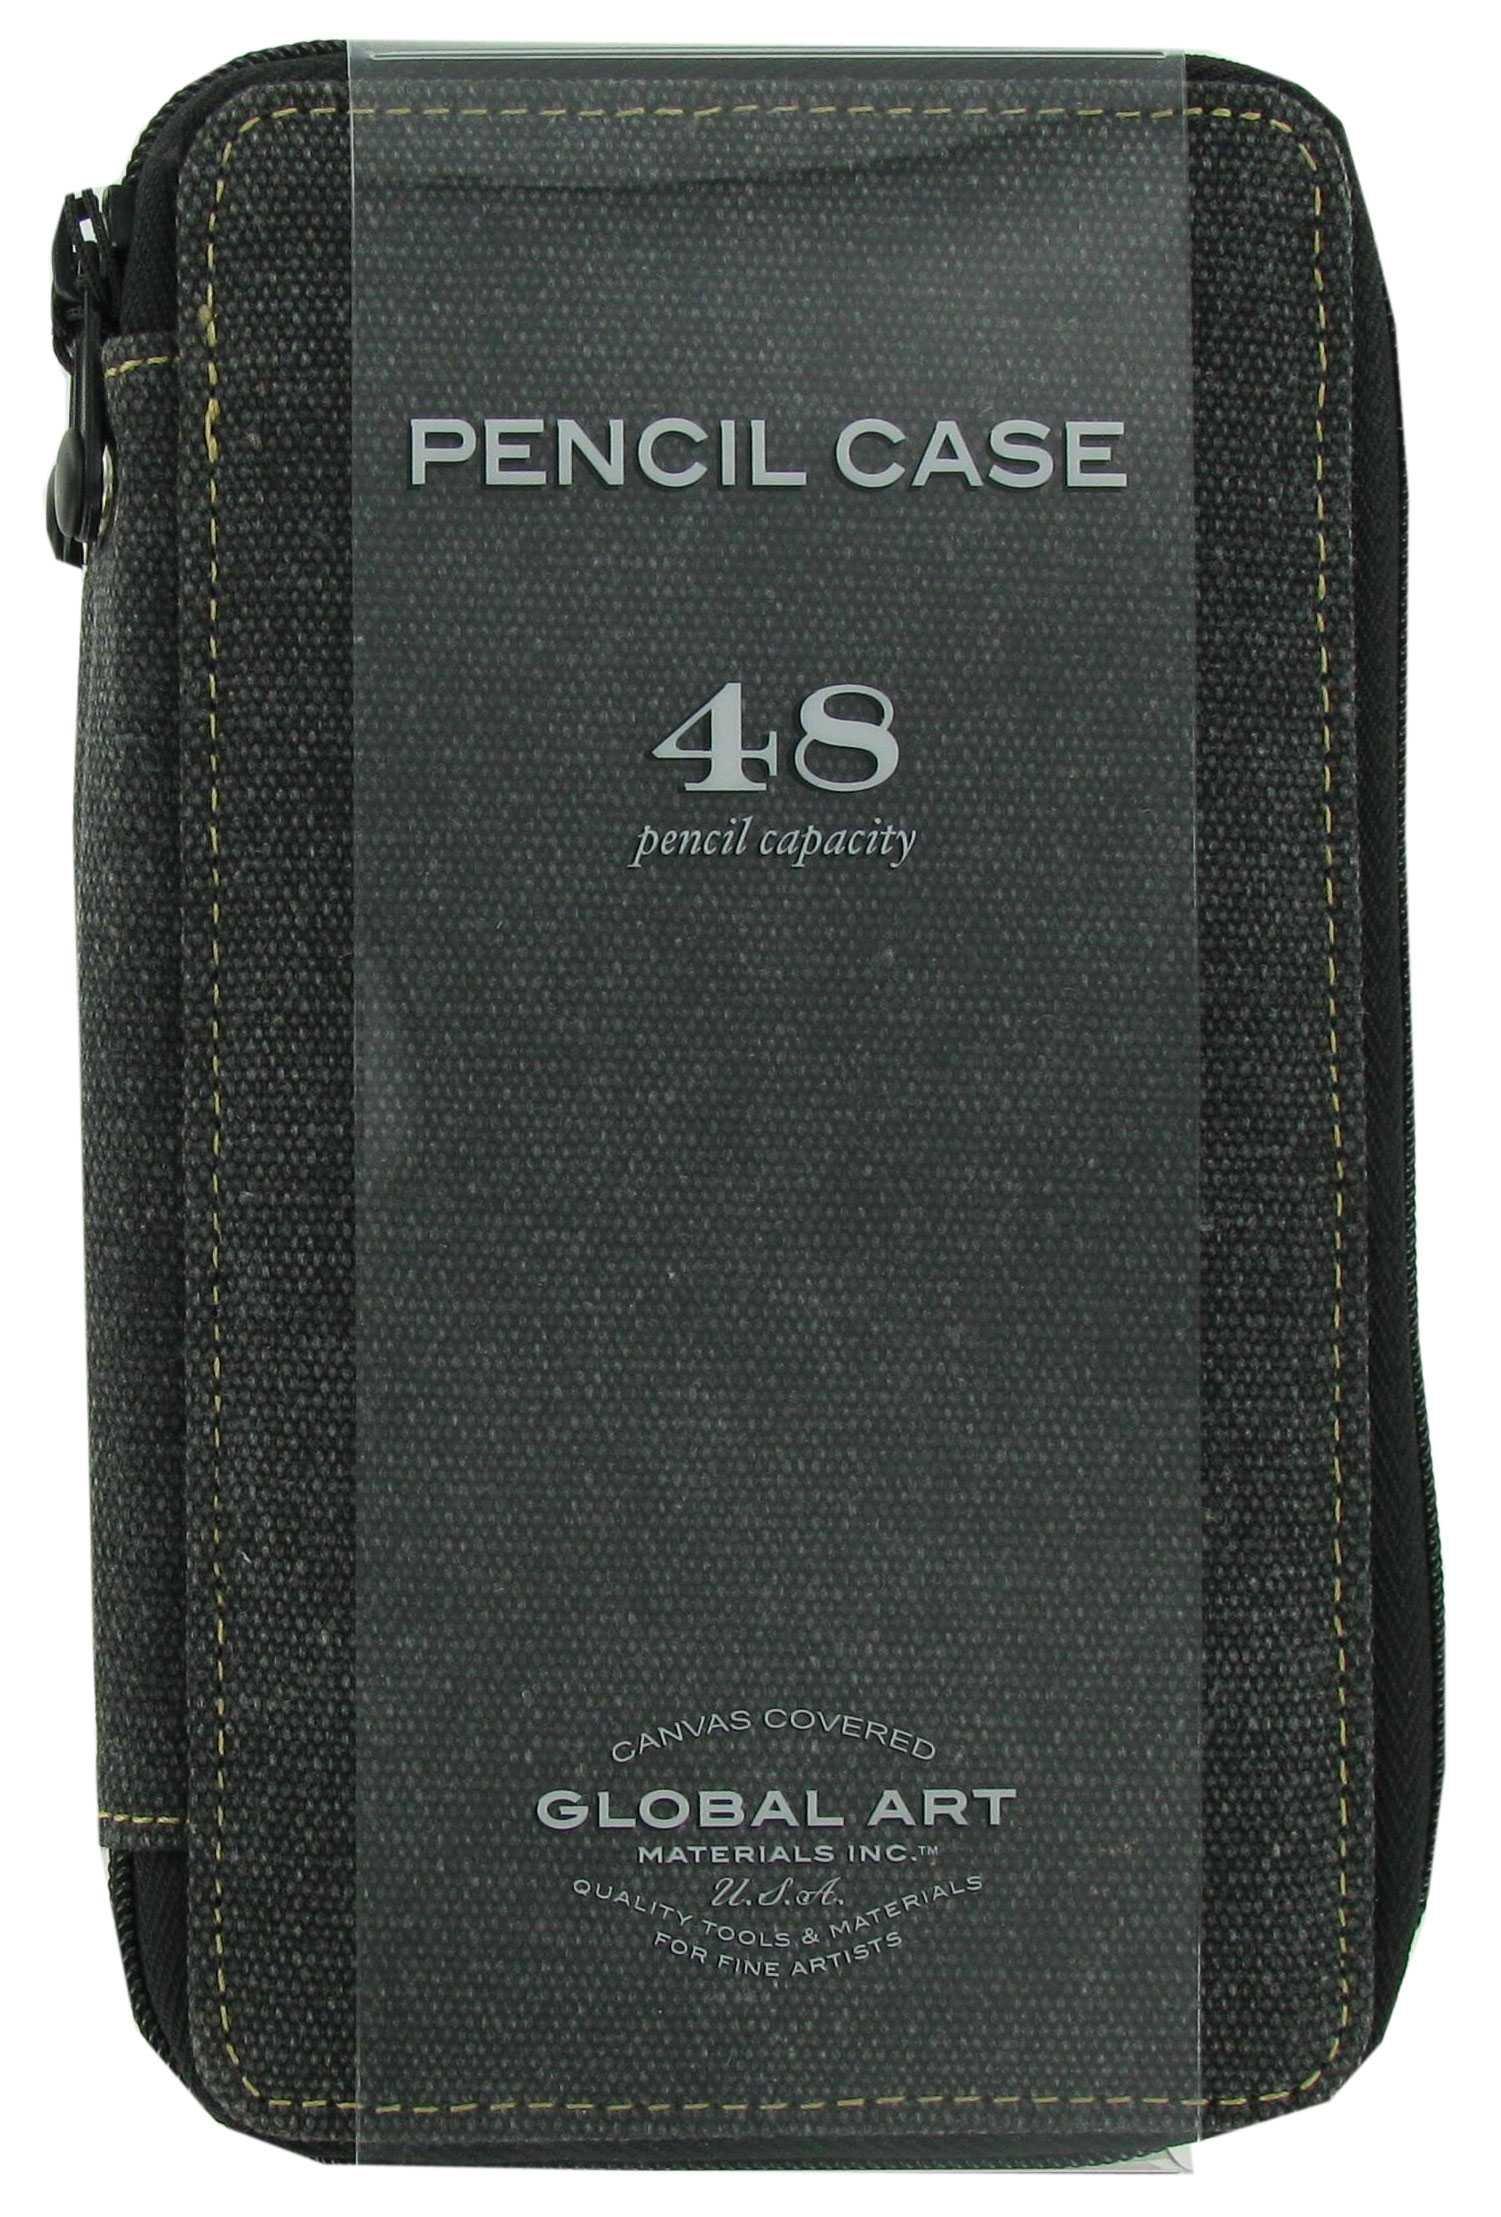 Global Art Canvas 120-Pencil Case, Black - 20207489